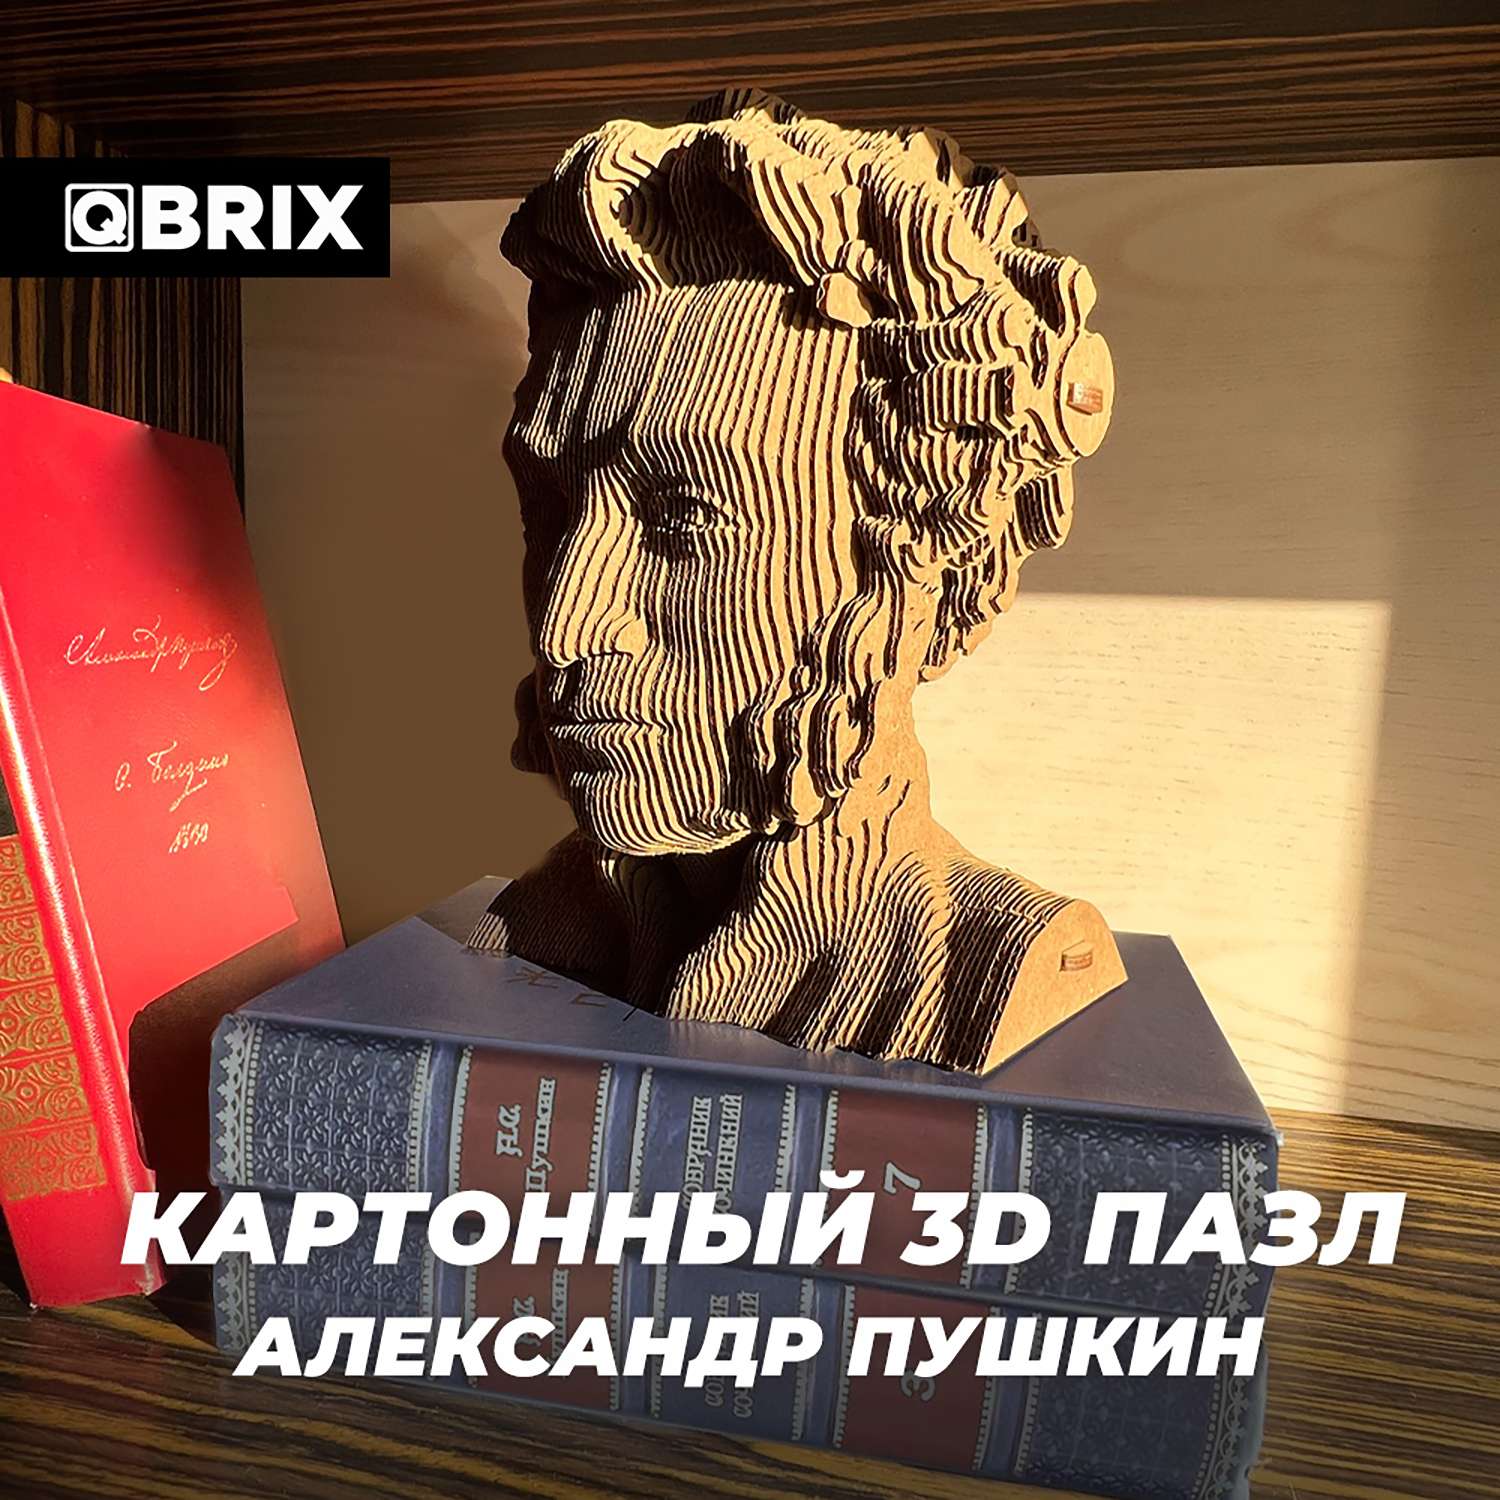 Конструктор QBRIX 3D картонный Александр Пушкин 20014 20014 - фото 6